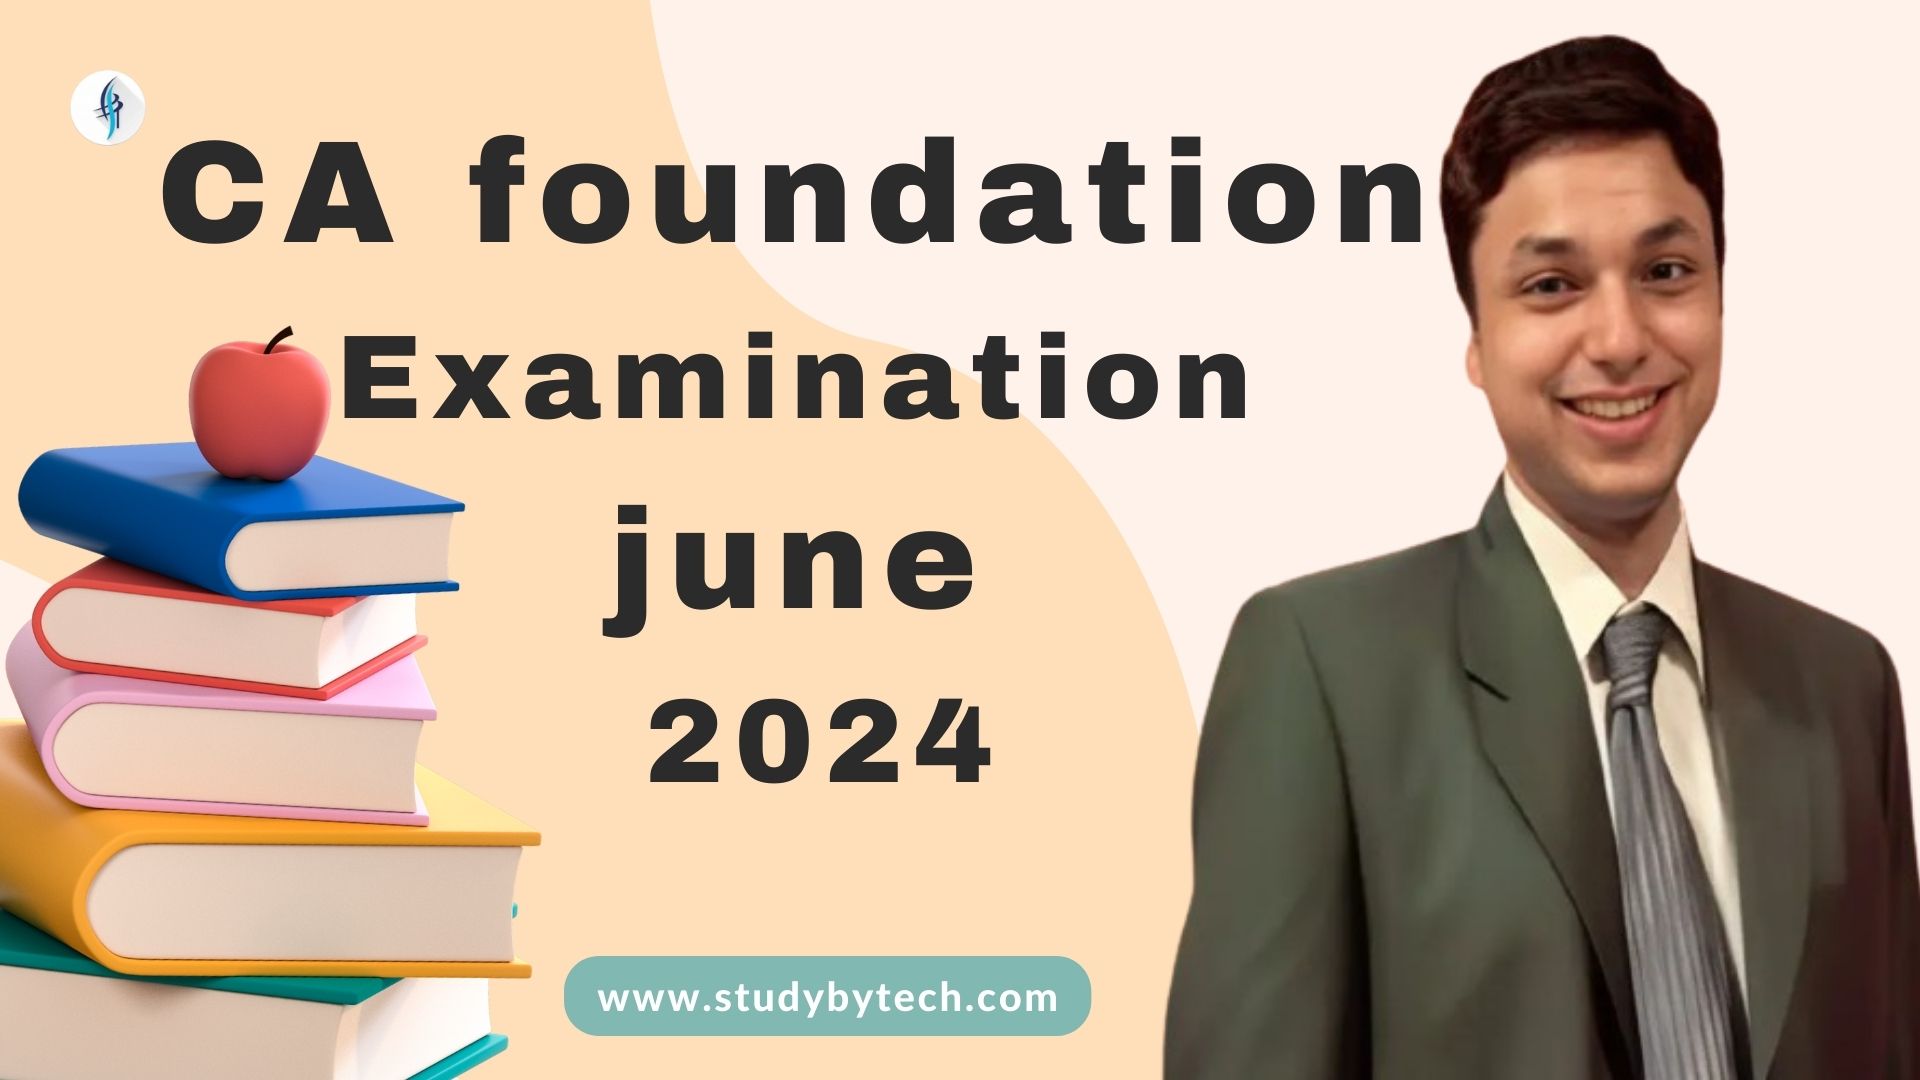 CA Foundation Examination, June 2024